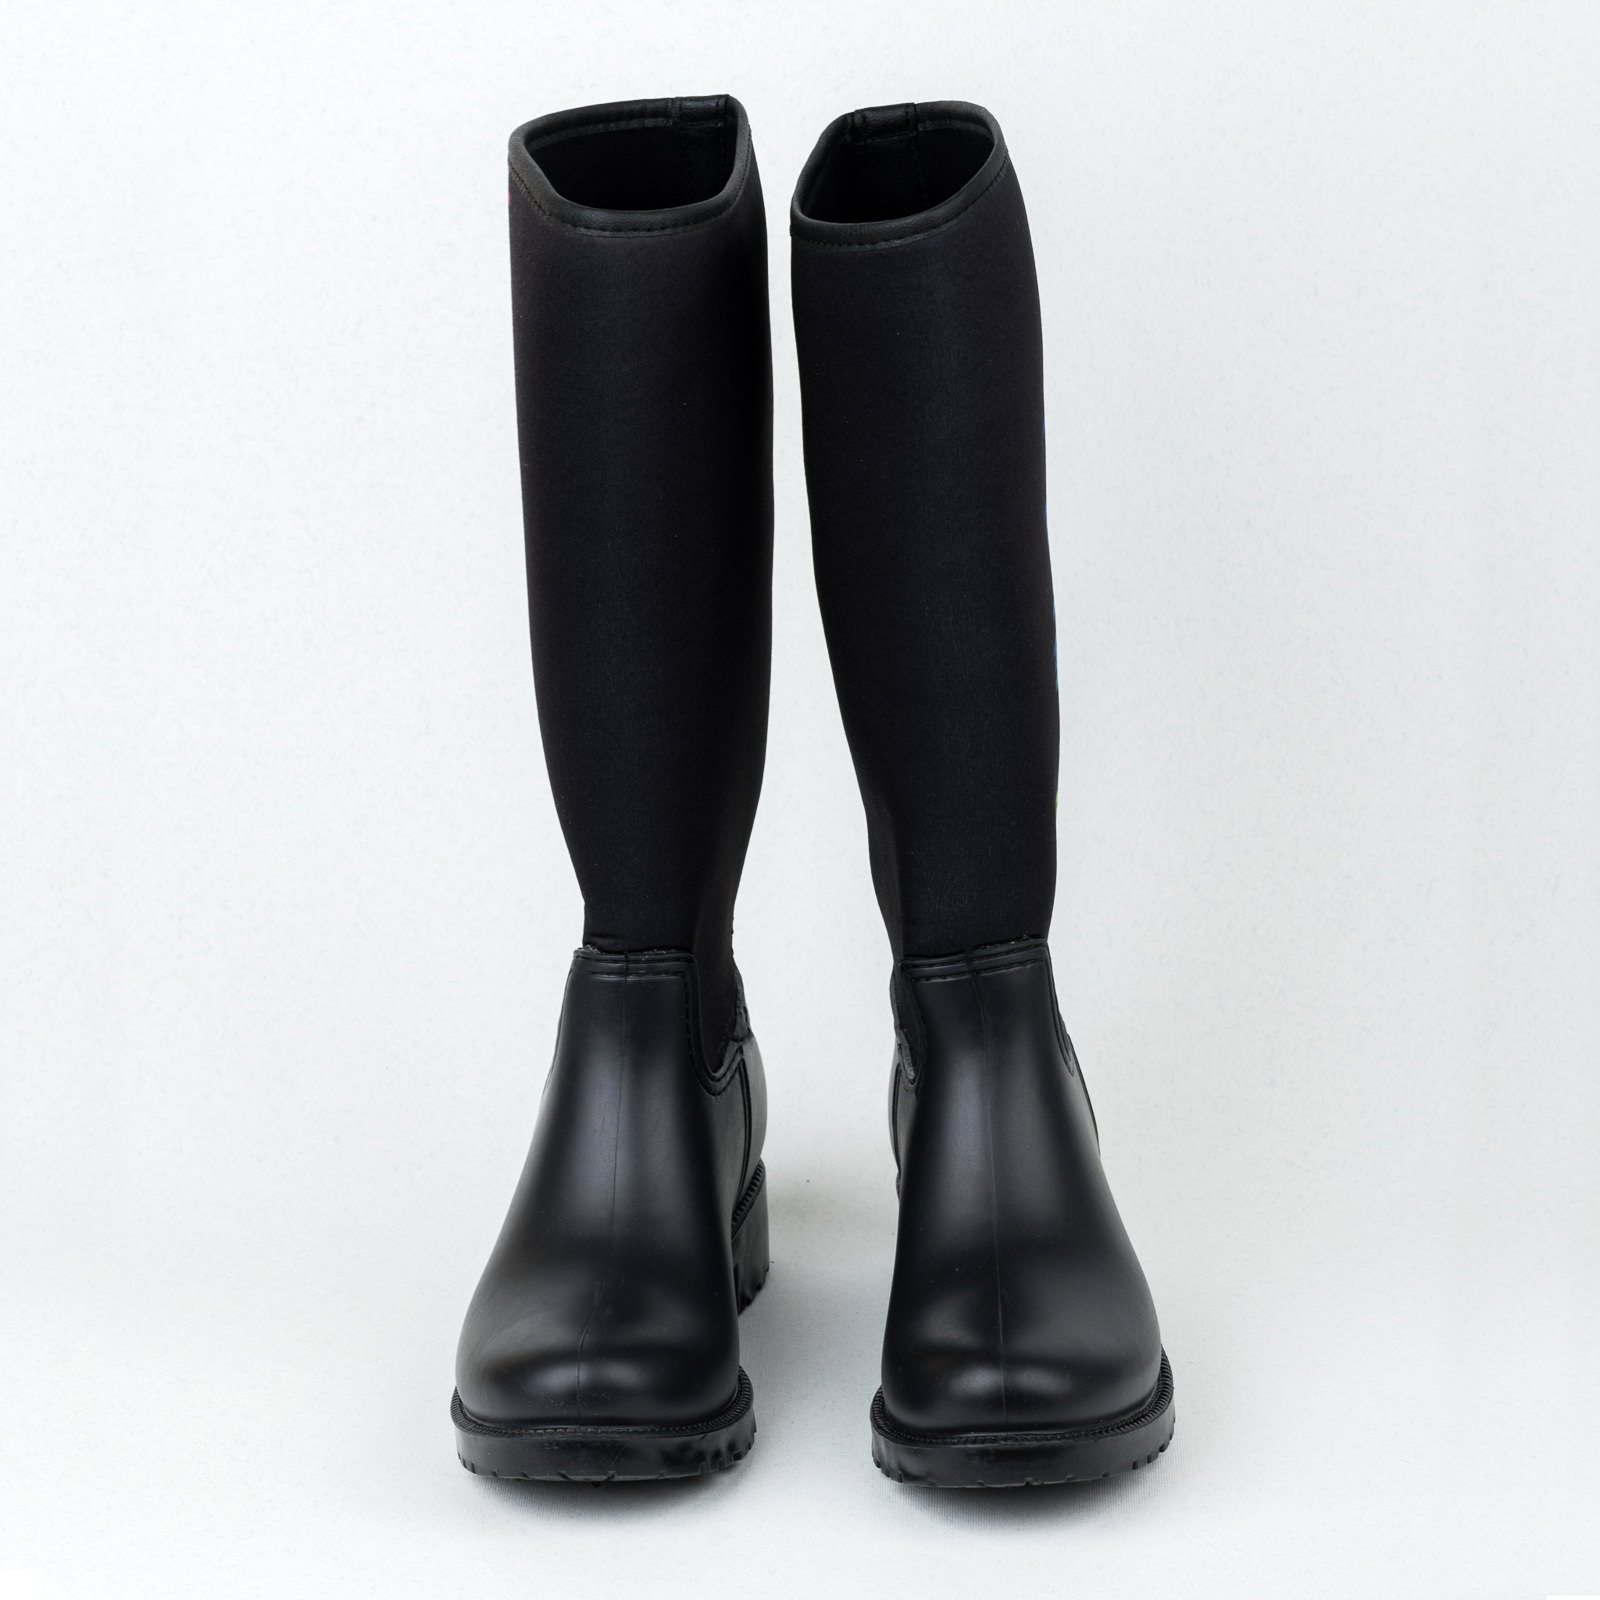 Waterproof boots B579 - BLACK